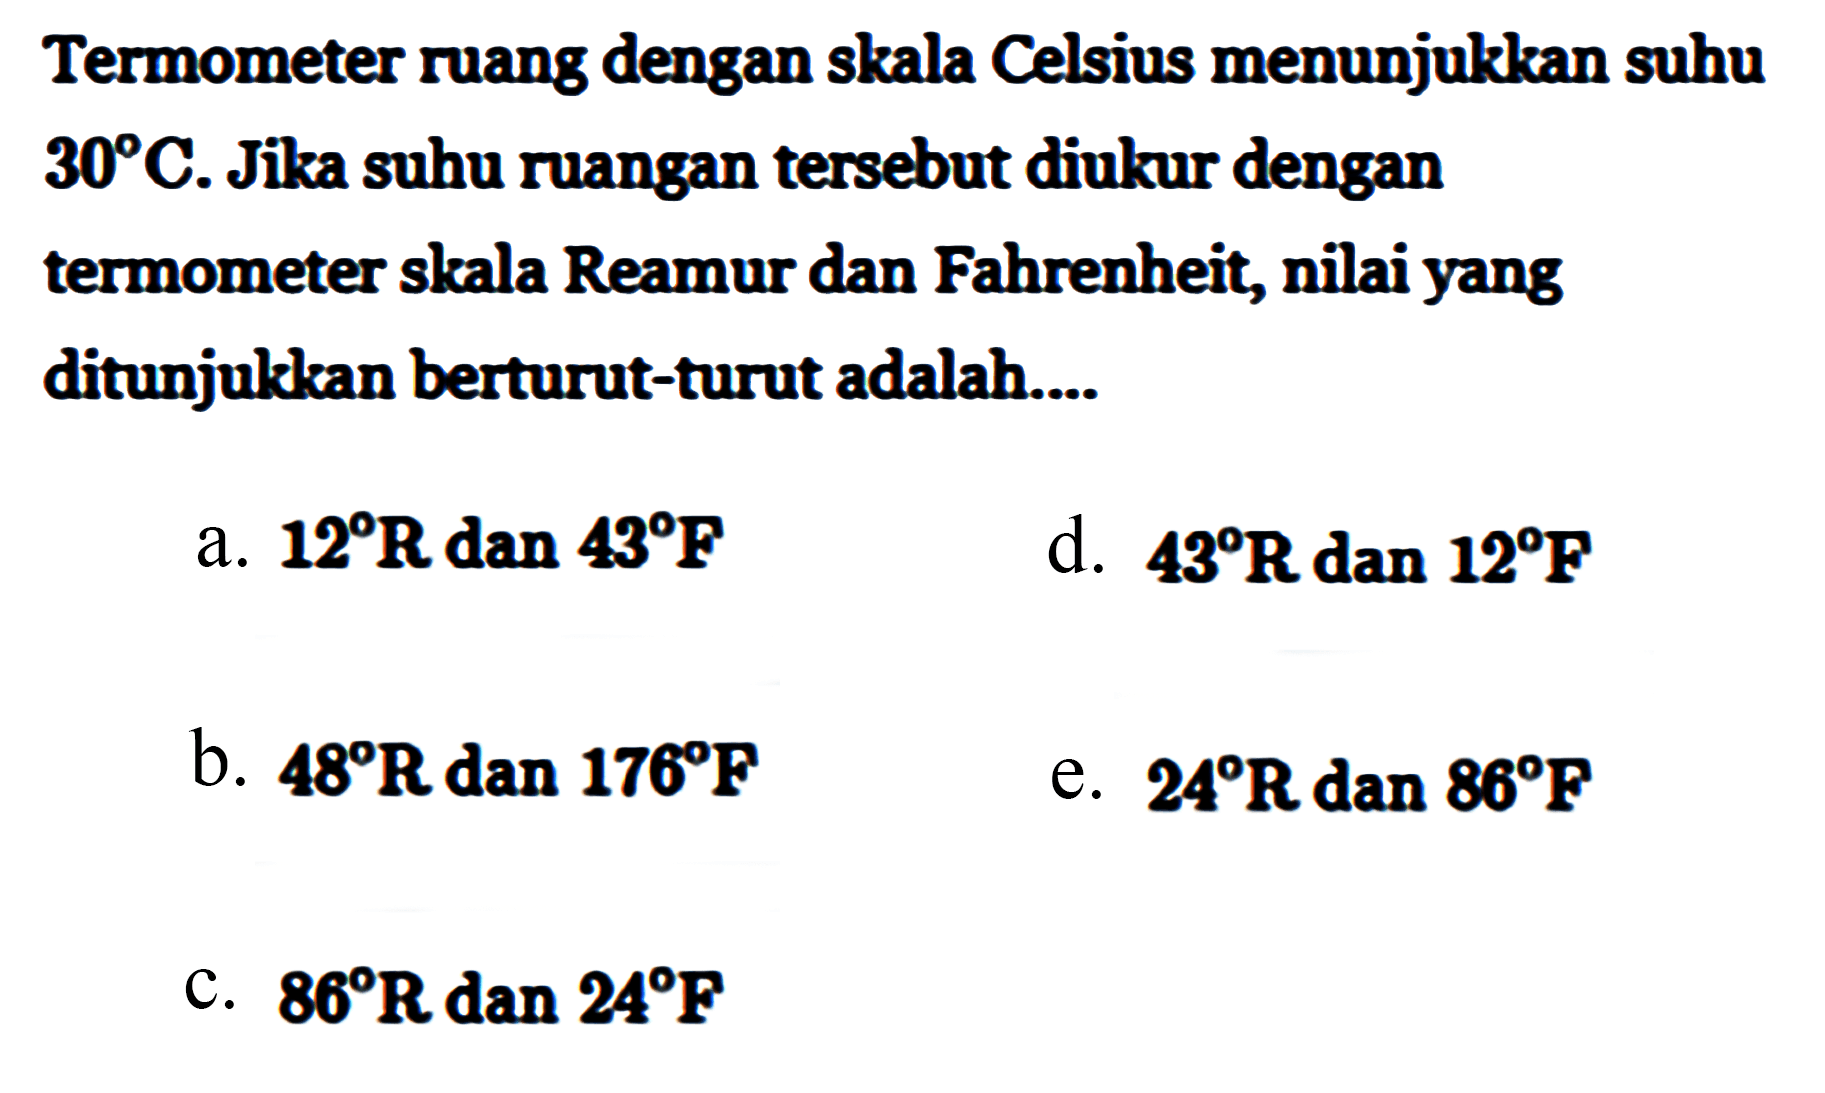 Termometer ruang dengan skala Celsius menunjukkan suhu 30 C. Jika suhu ruangan tersebut diukur dengan termometer skala Reamur dan Fahrenheit, nilai yang ditunjukkan berturut-turut adalah ...